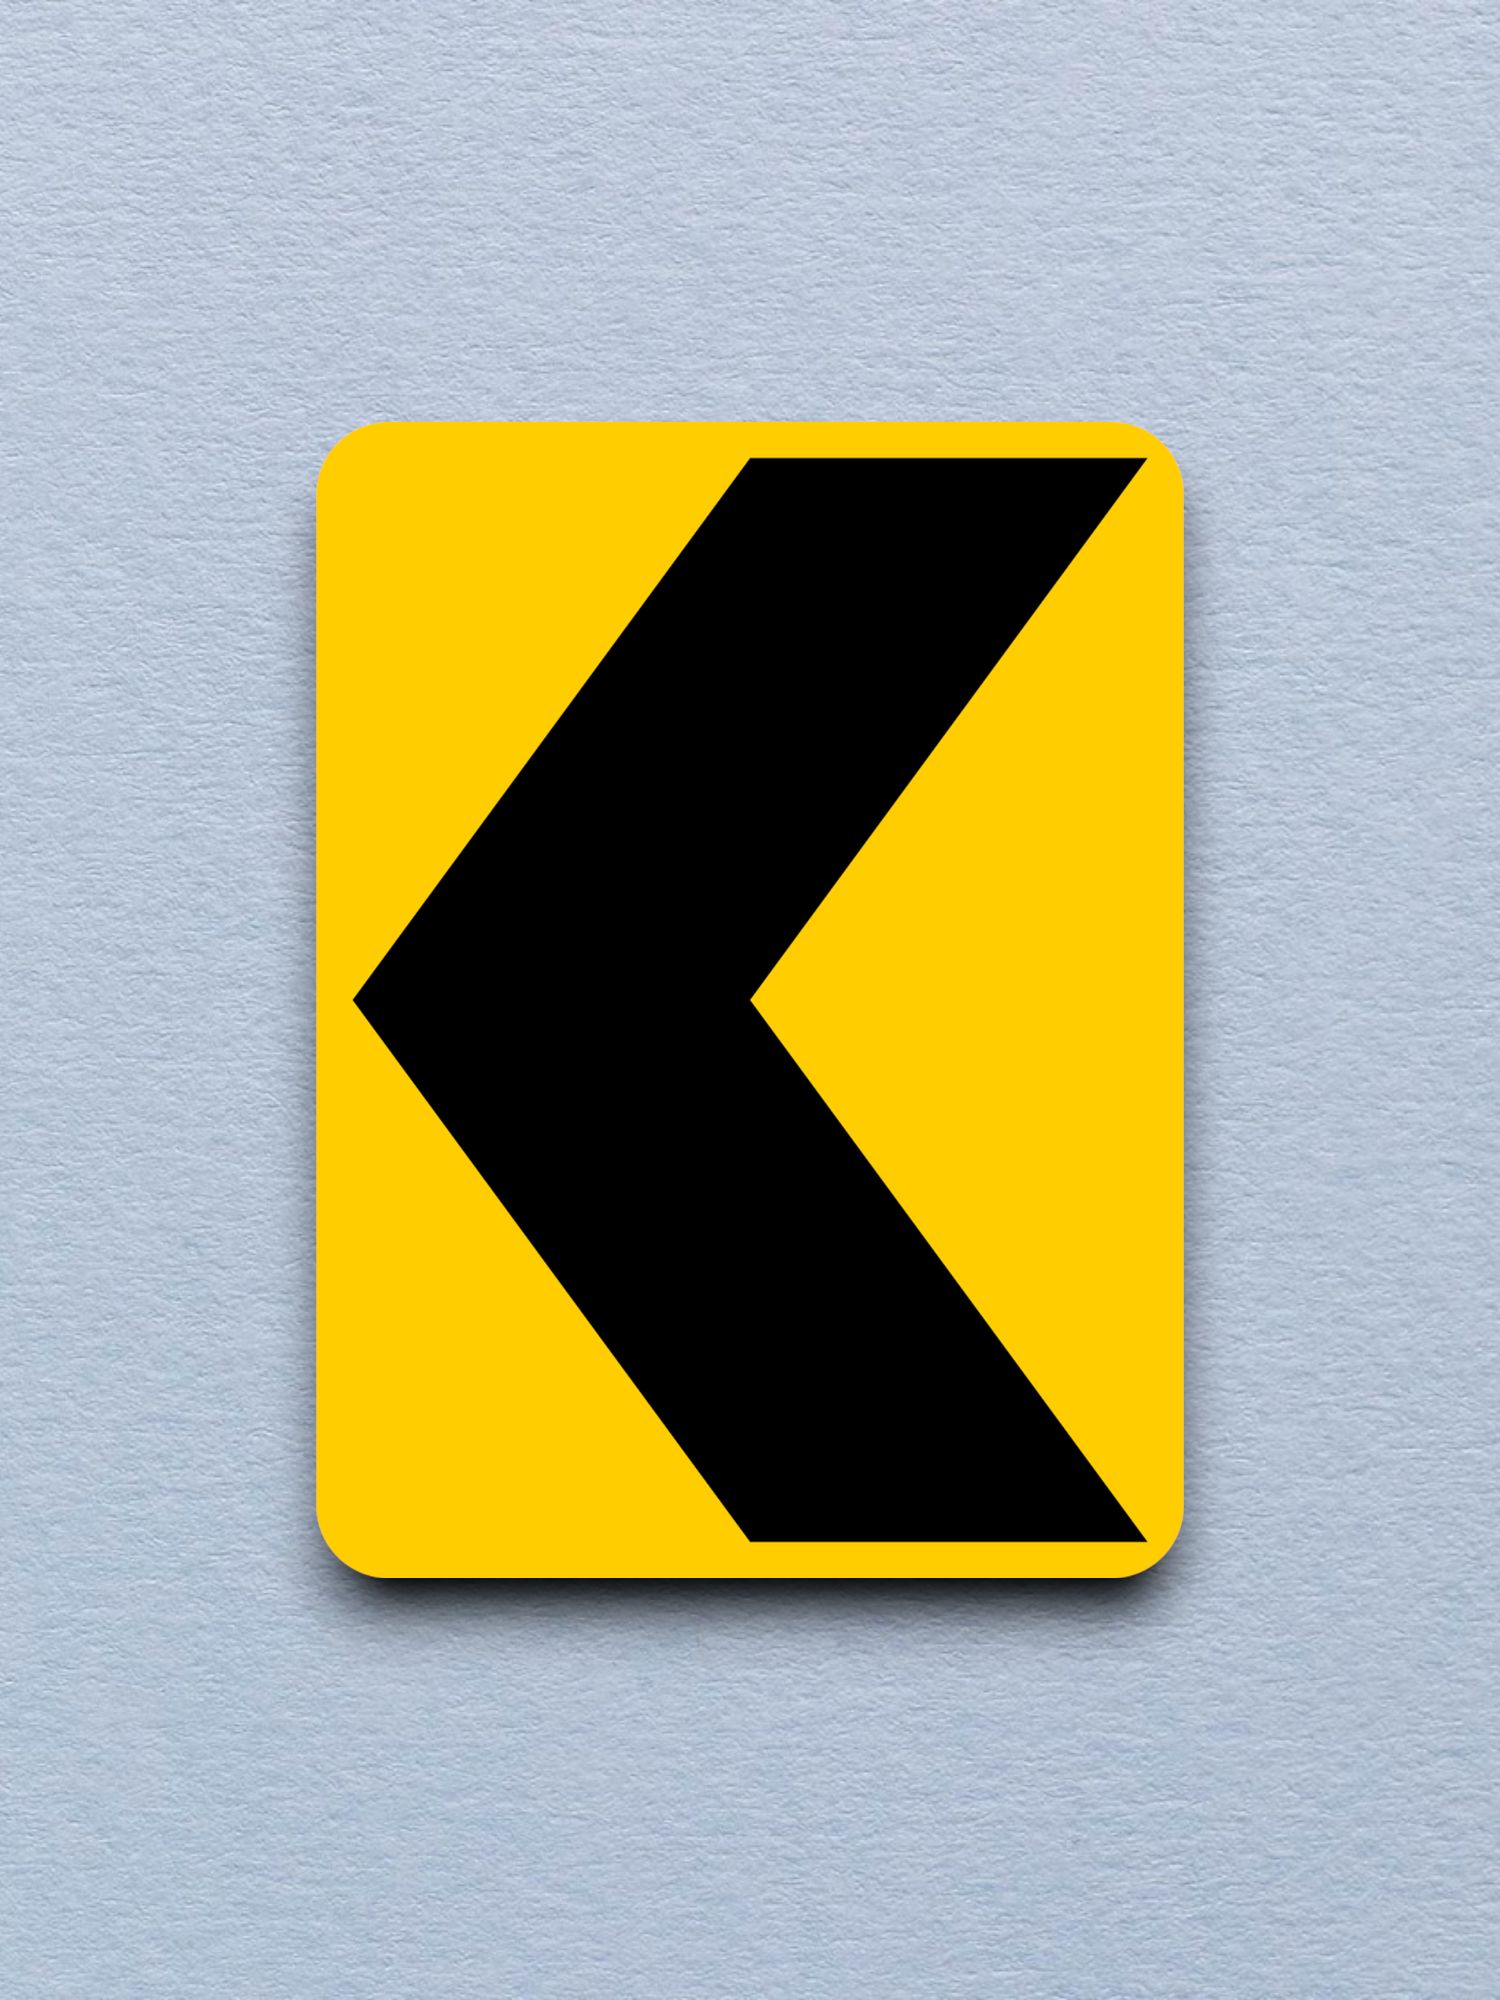 Chevron United States Road Sign Sticker